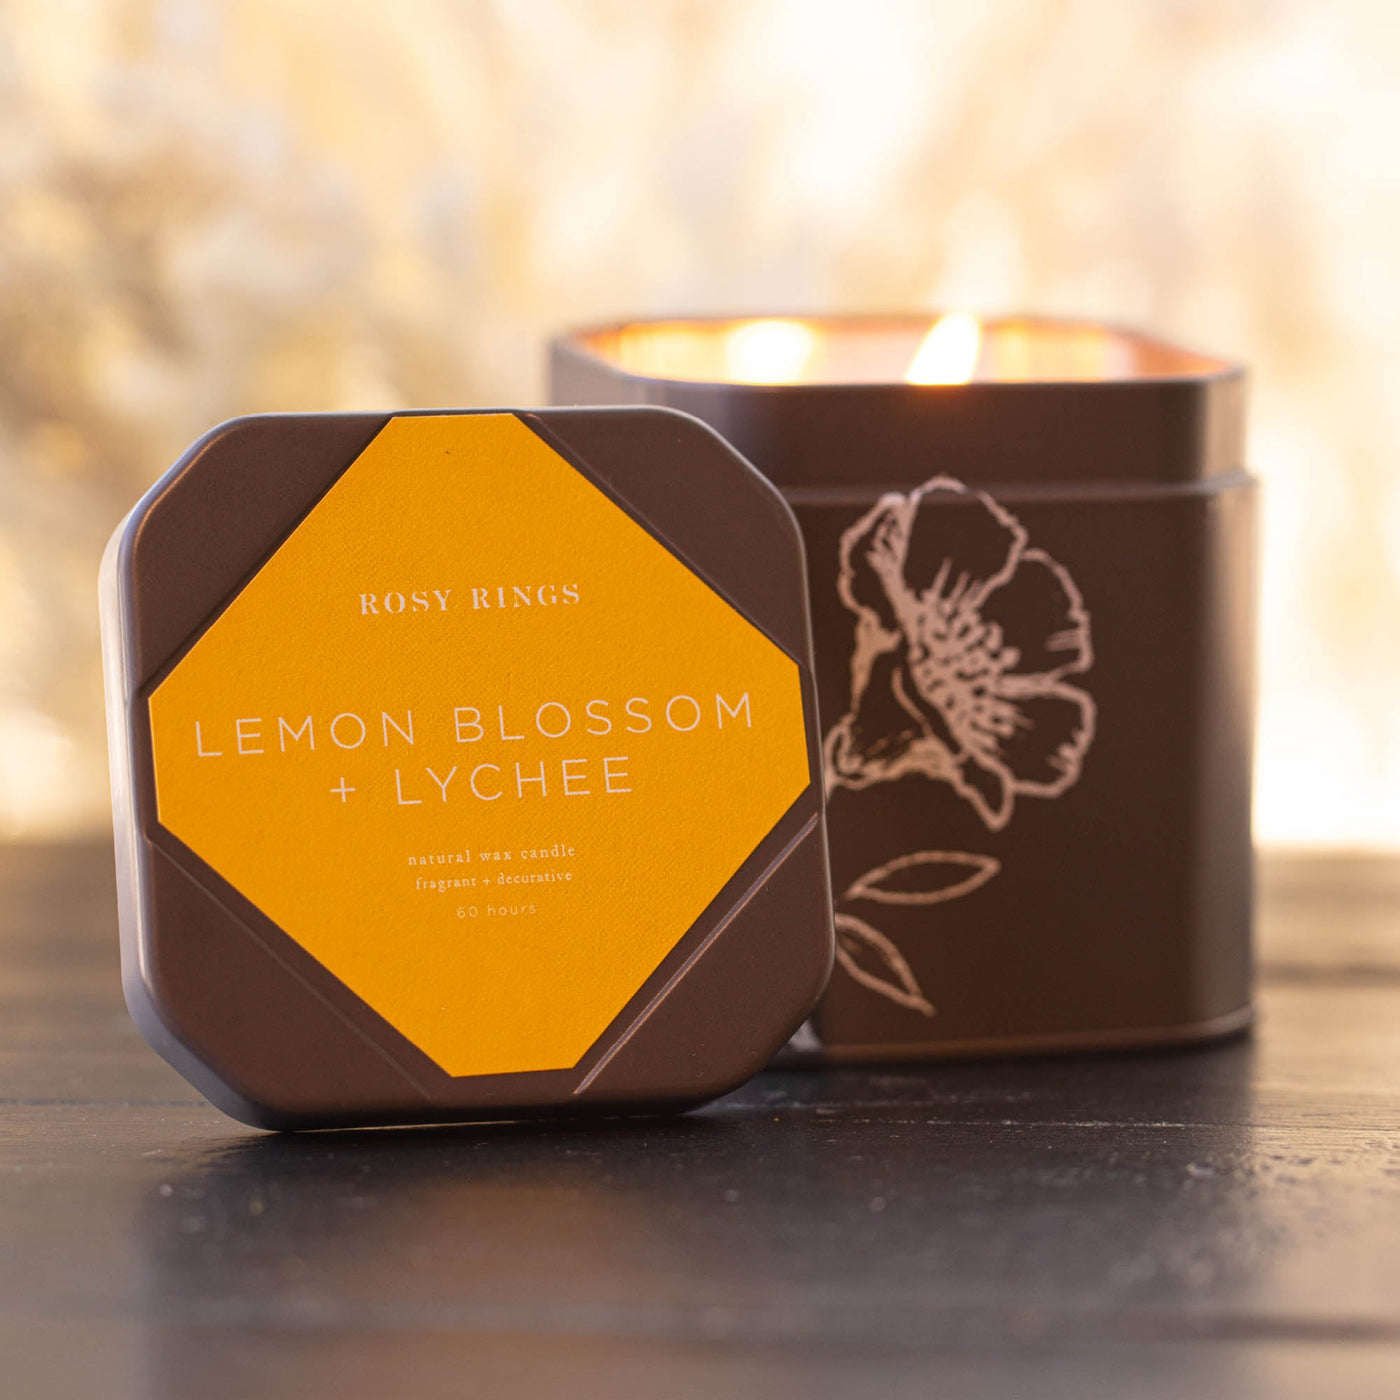 Lemon Blossom Signature Tin